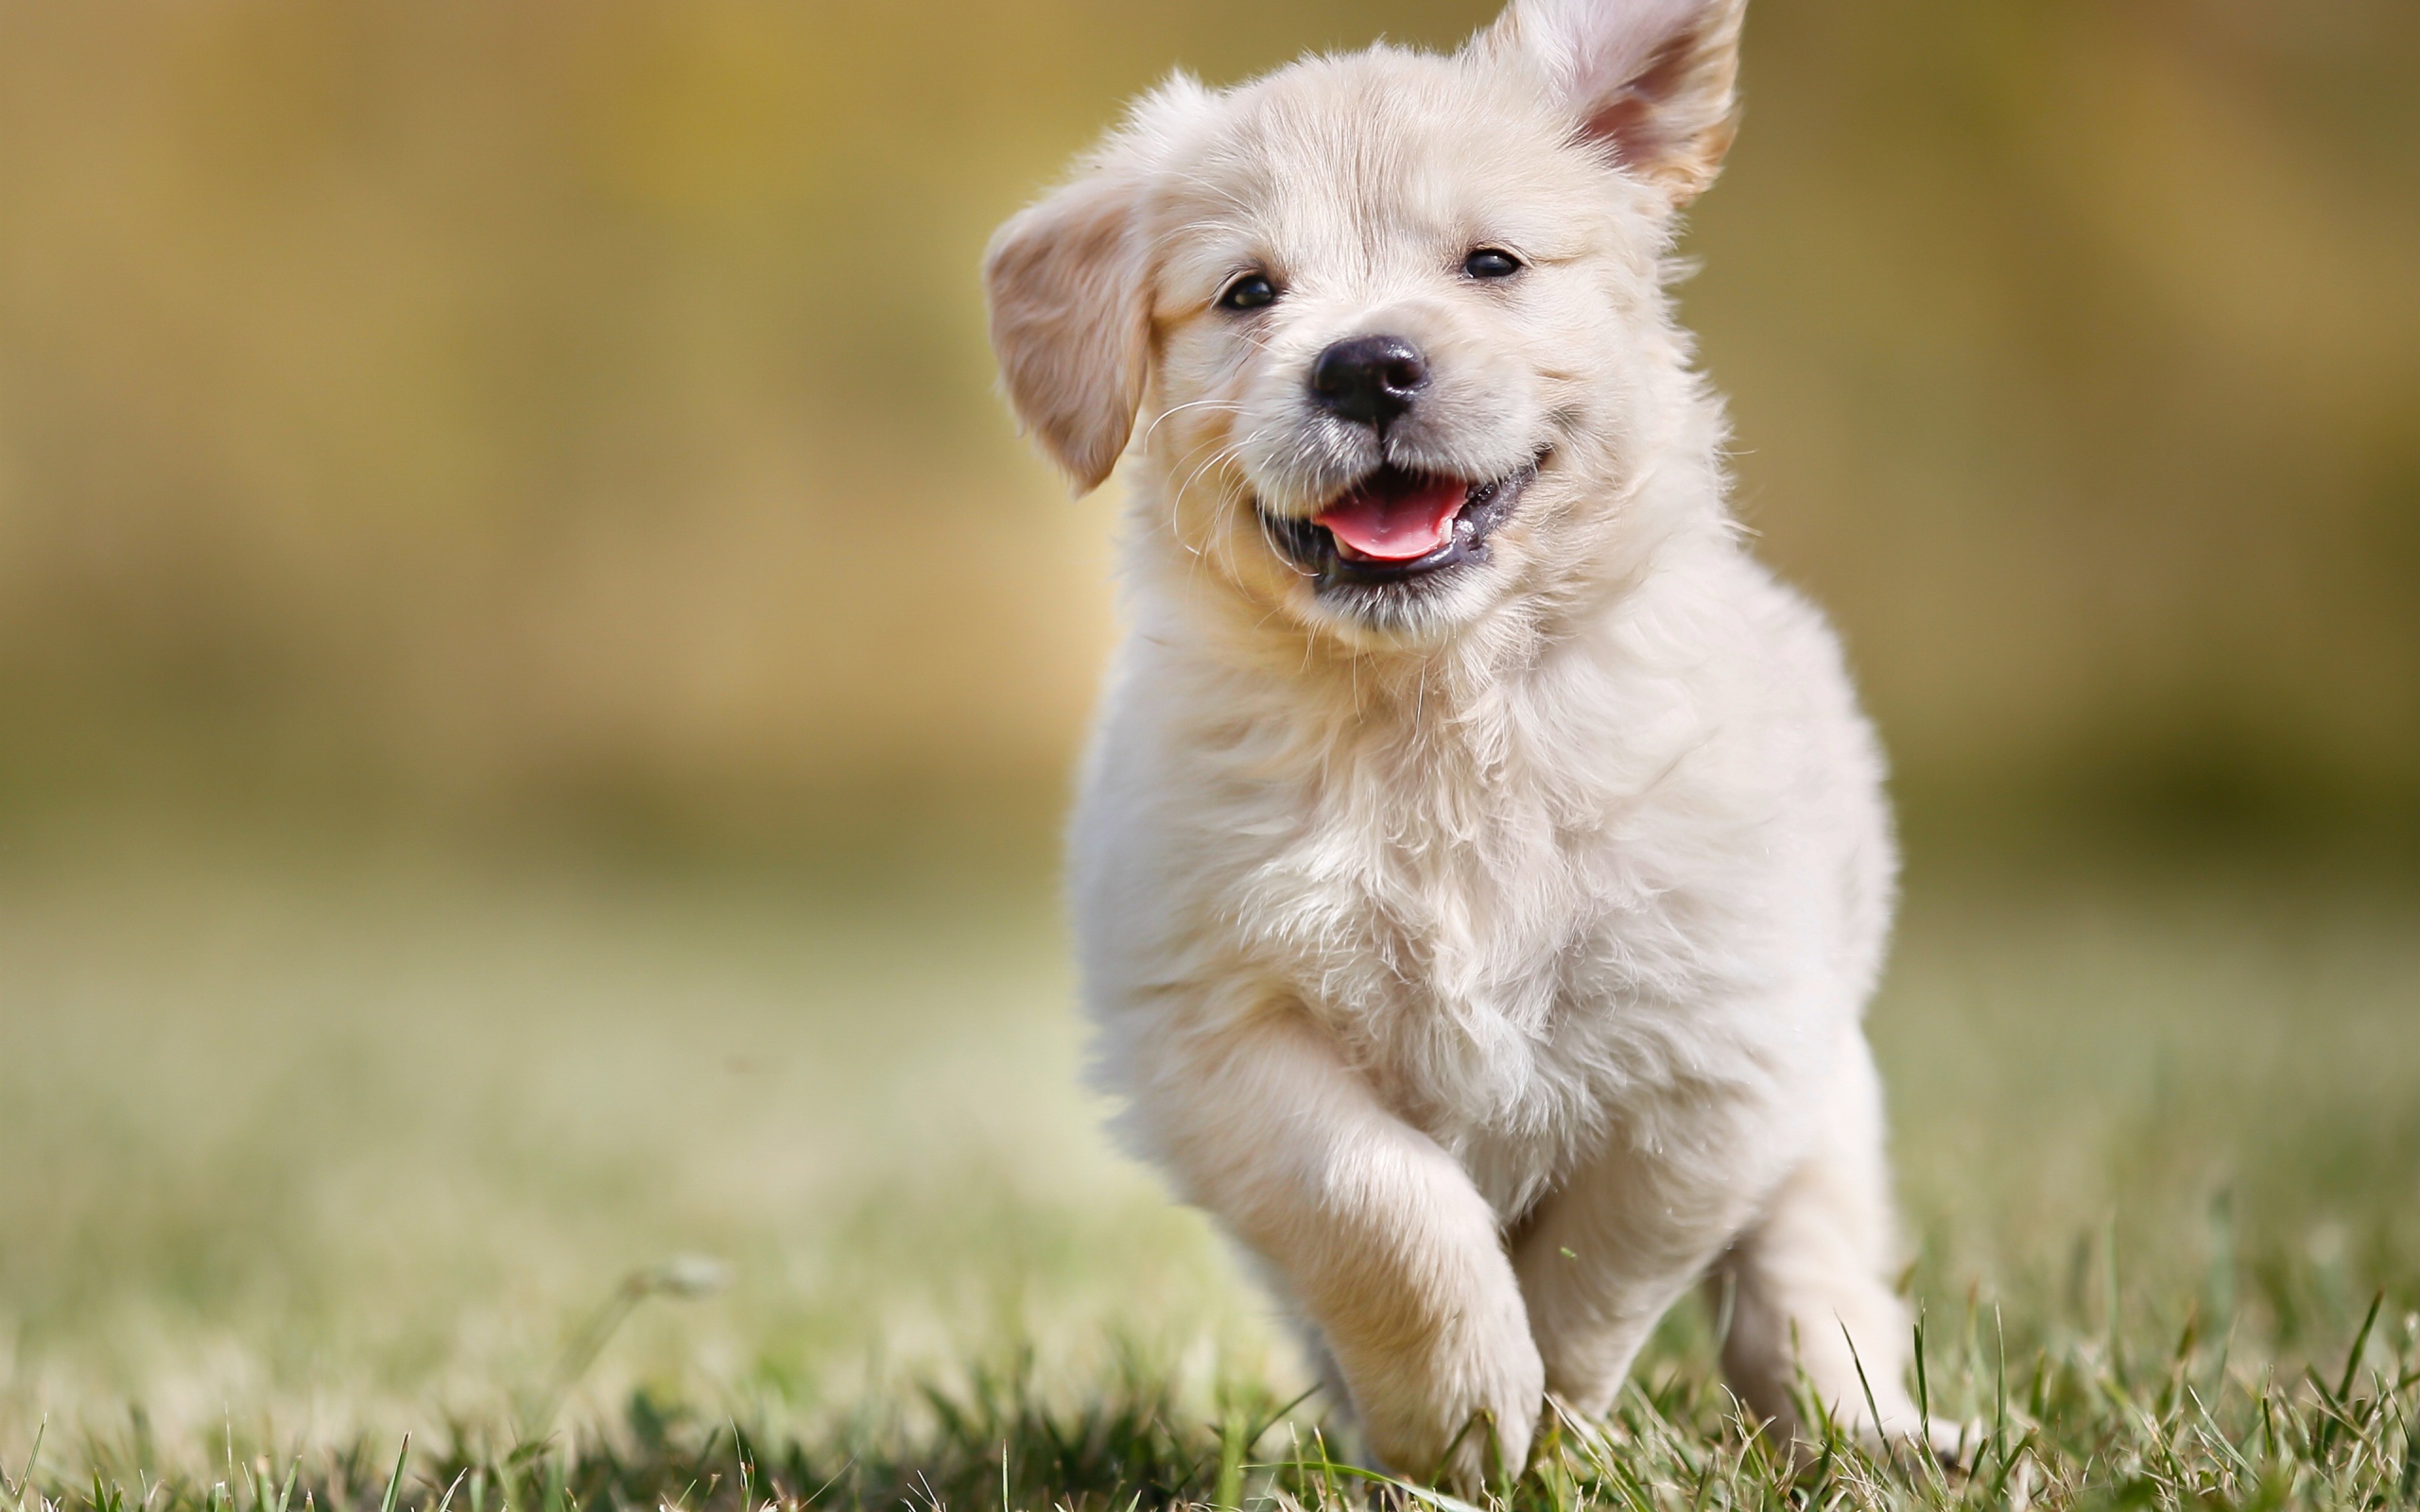 A contented golden retriever puppy runs through green grass